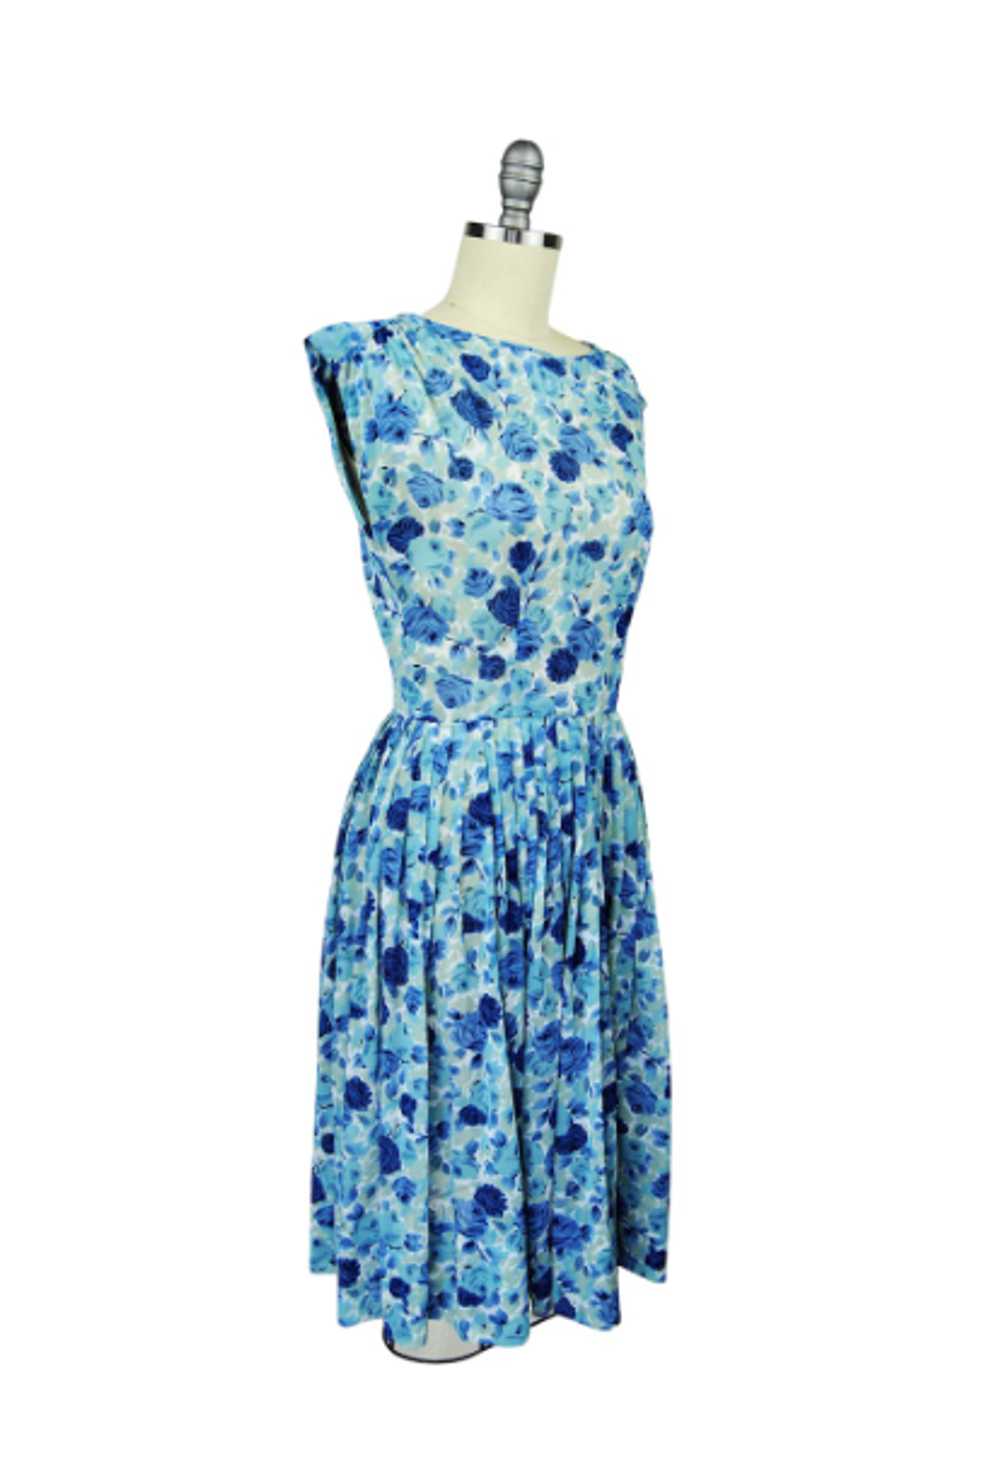 1960s Patty Petite Semi Sheer Blue Floral Dress - sm - Gem